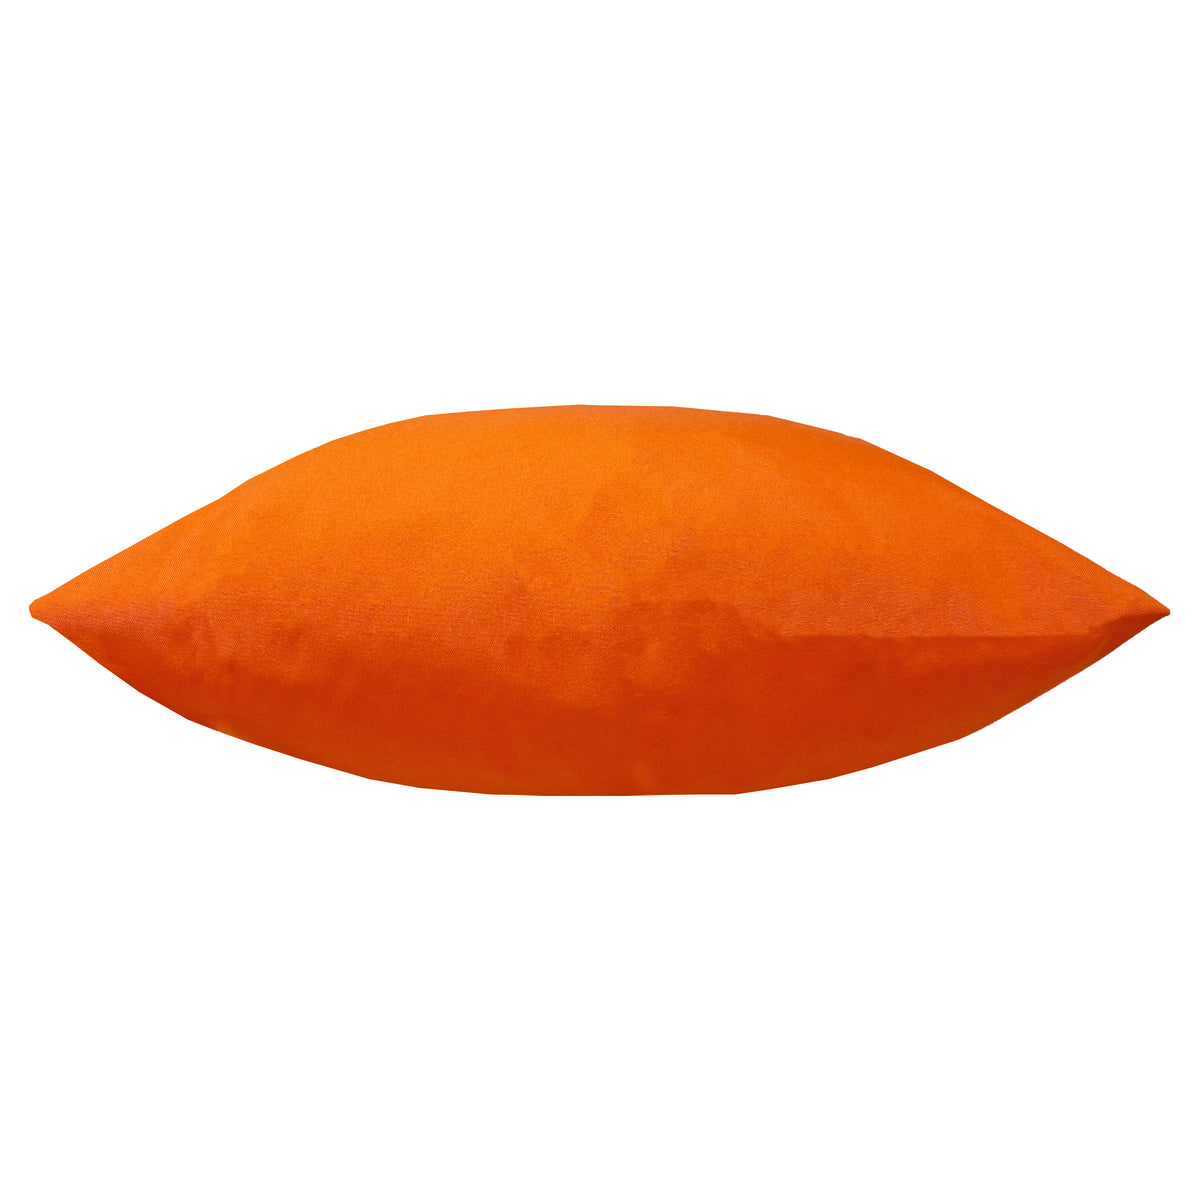 Plain 55X55 Outdoor Polyester Cushion Orange 2 Pack